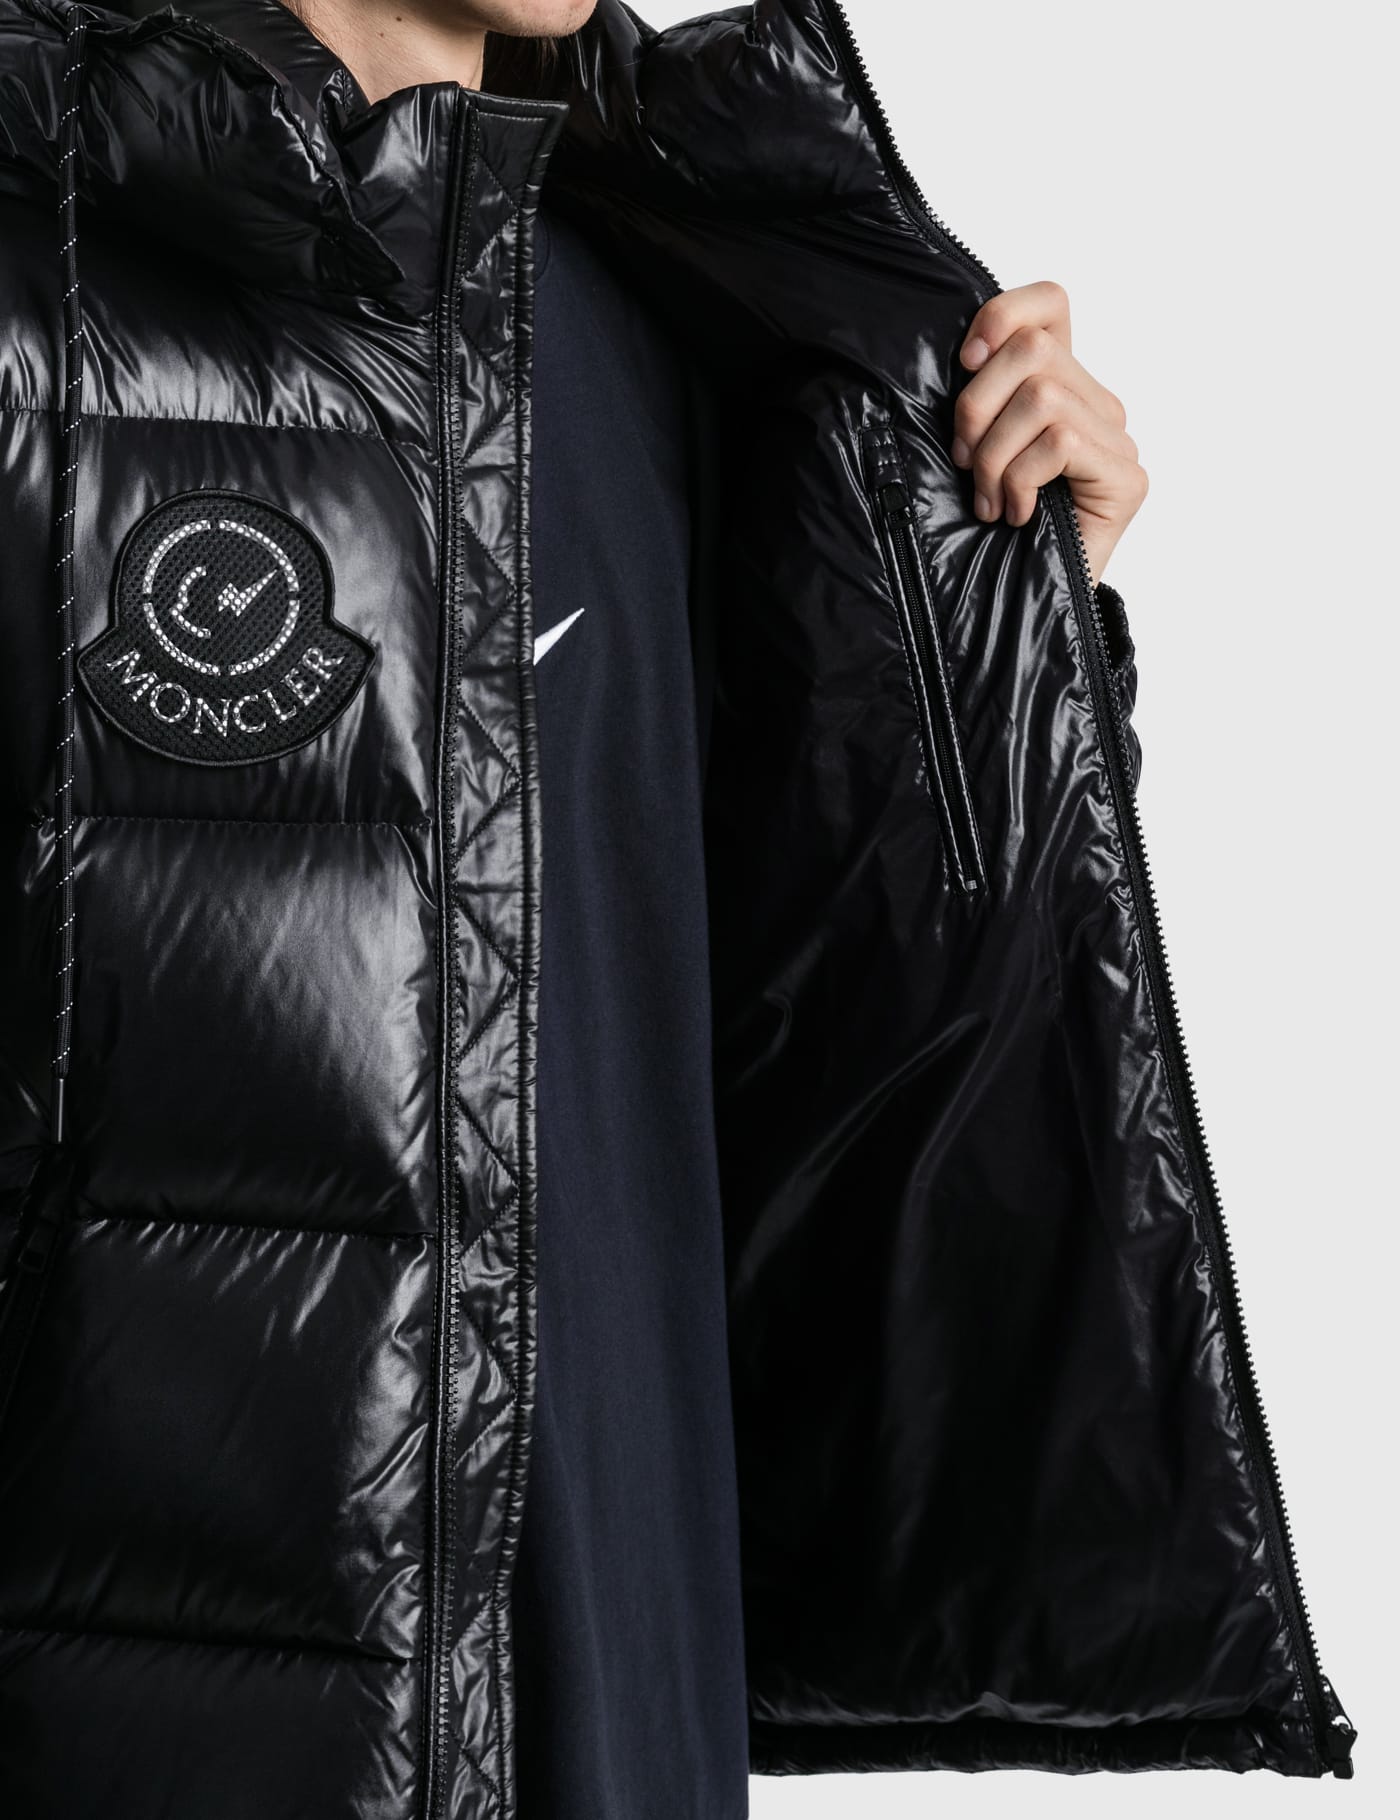 Moncler Genius - 7 Moncler Frgmt Hiroshi Fujiwara Hantium Jacket | HBX -  Globally Curated Fashion and Lifestyle by Hypebeast